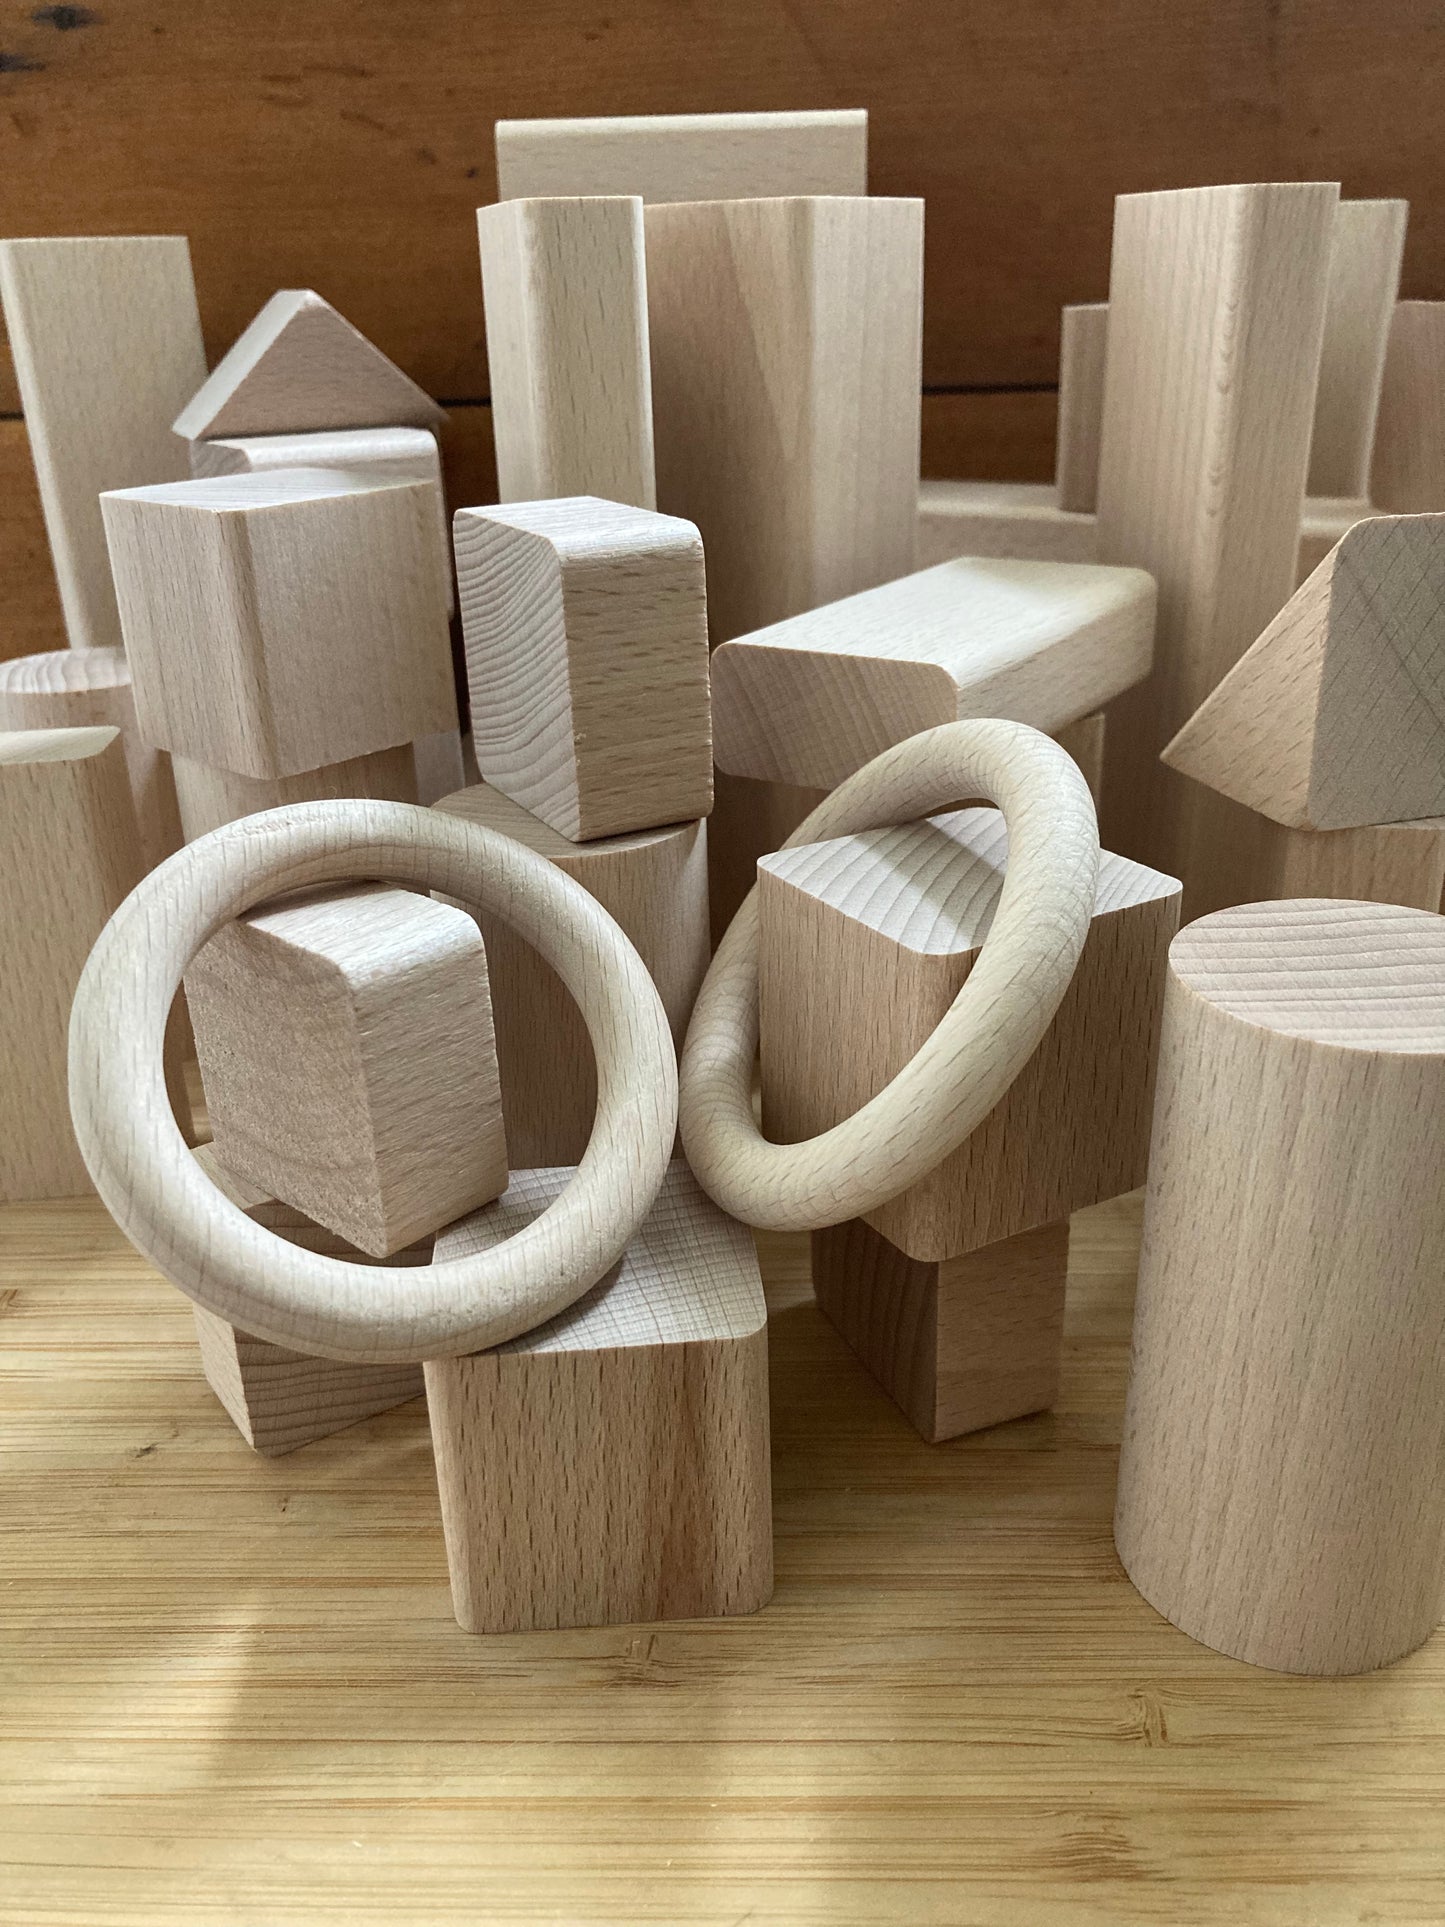 Wooden Toy Set - WOODEN BLOCKS, 45 Pieces!